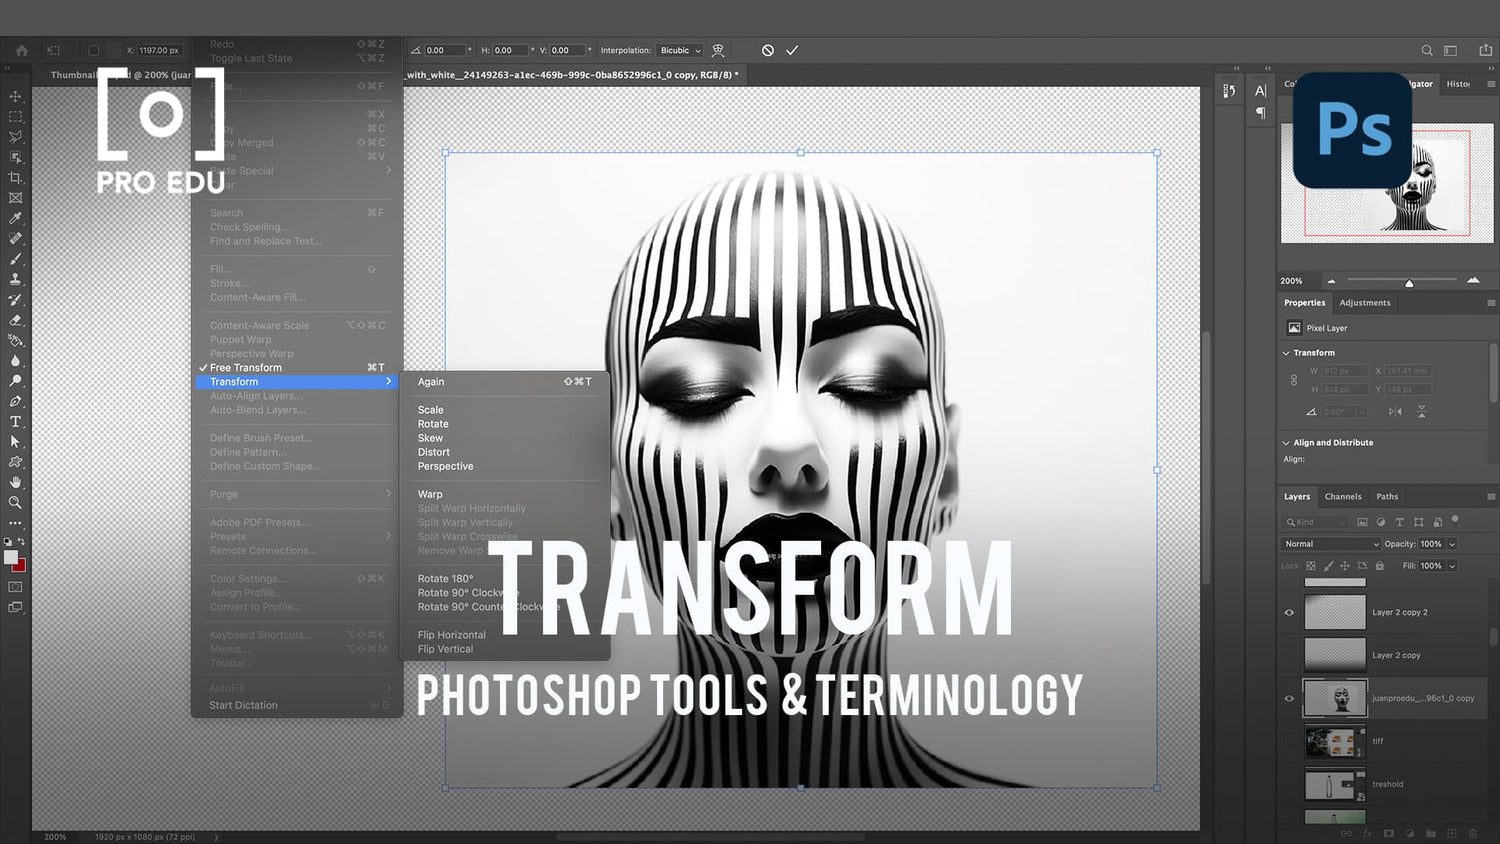 Transform Tool Techniques in Photoshop - PRO EDU Tutorial